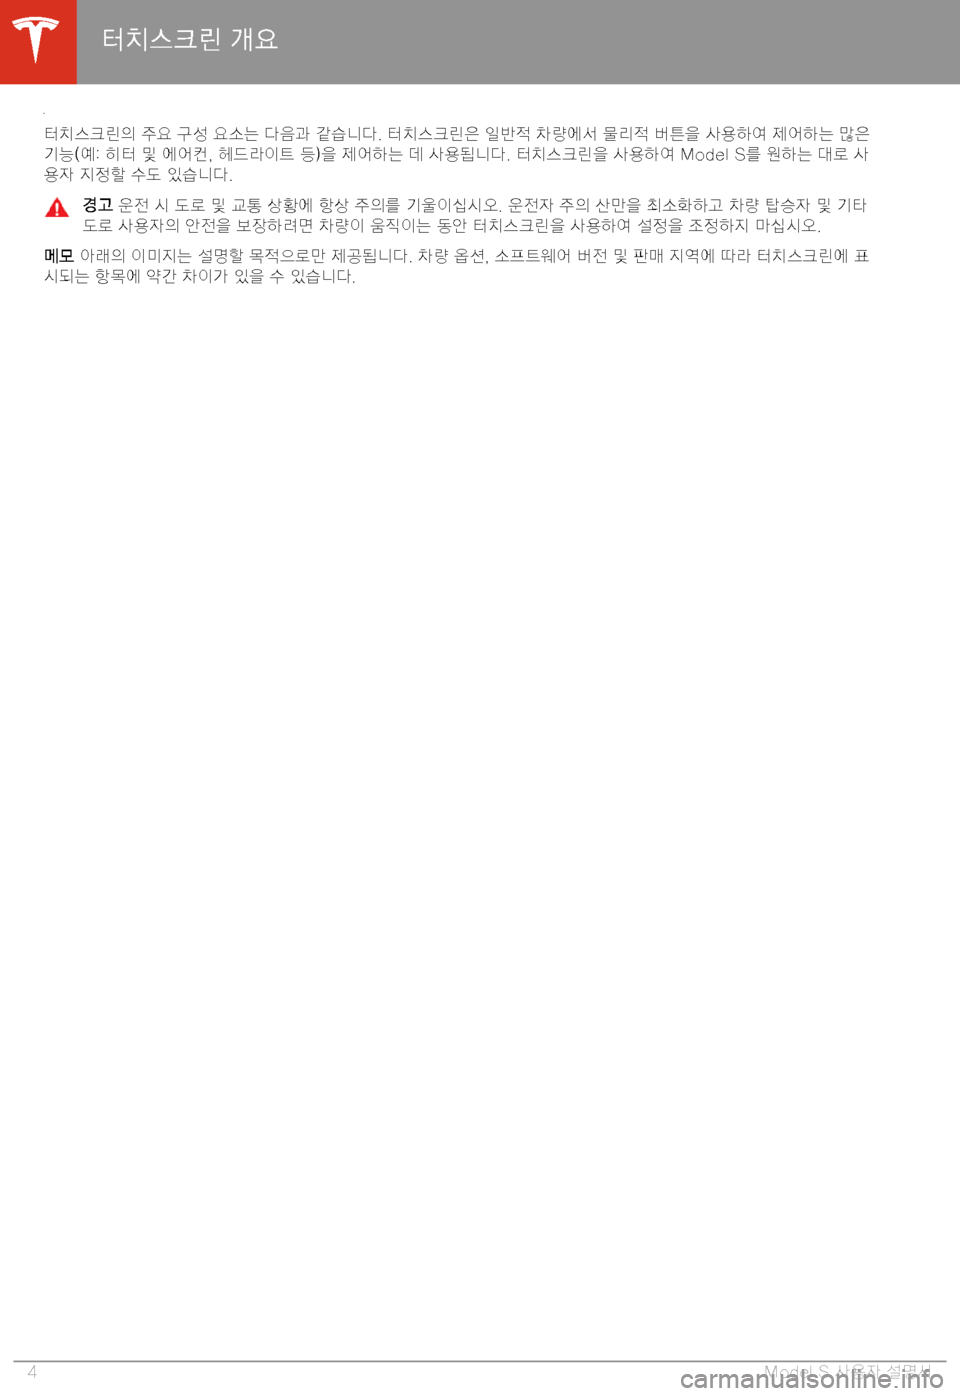 TESLA MODEL S 2020  사용자 가이드 (in Korean) GMDu8